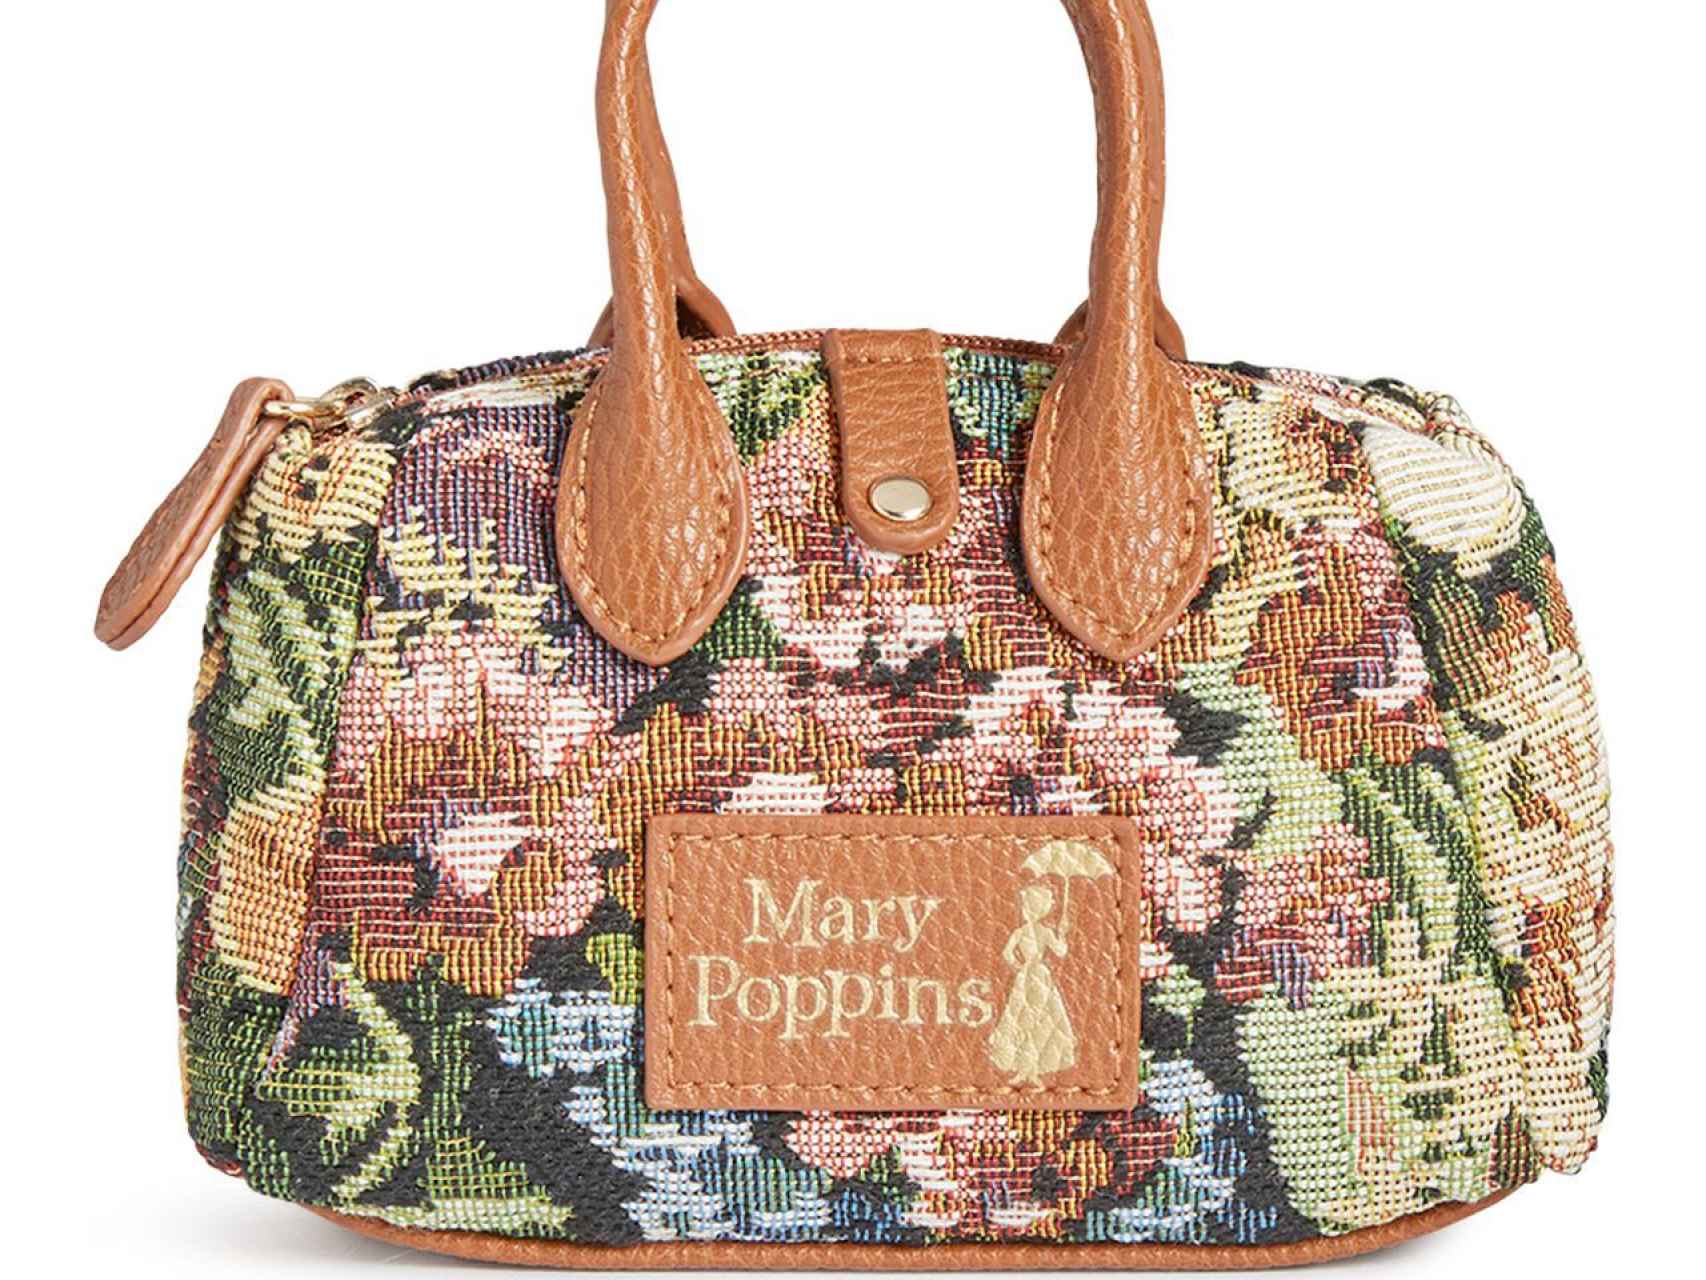 El bolso de Mary Poppins.